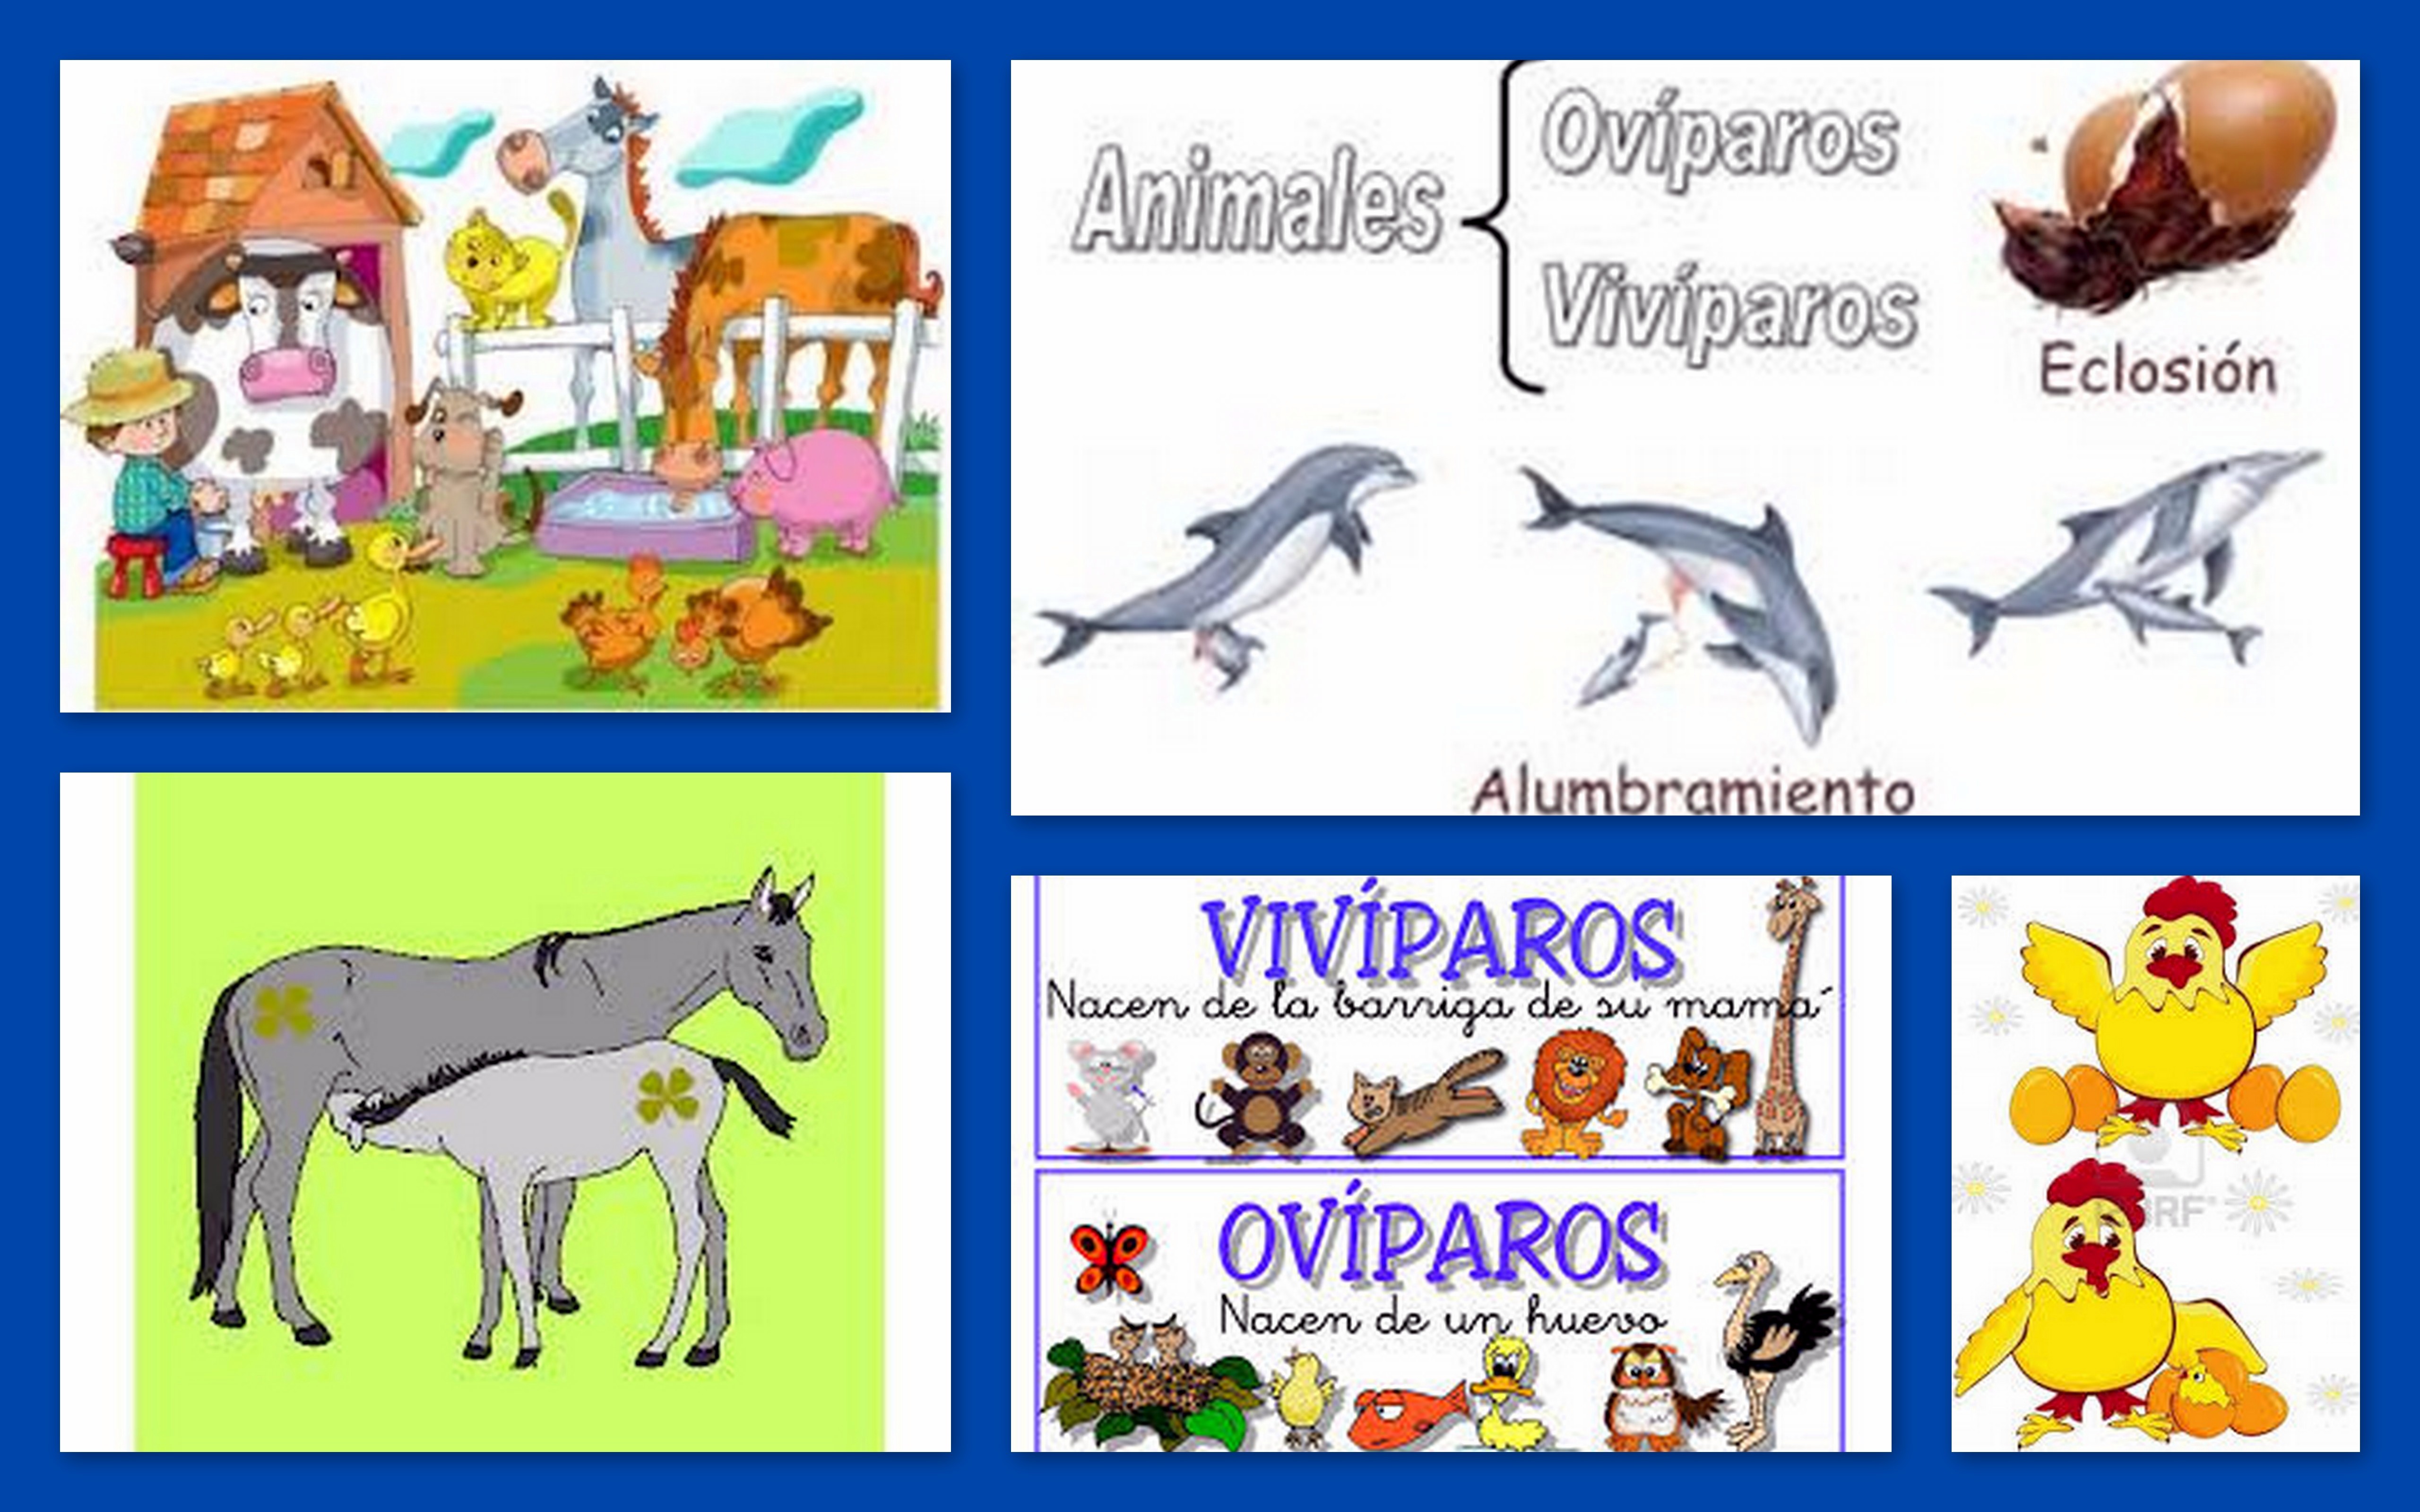 Imagenes Animales Viviparos Y Oviparos